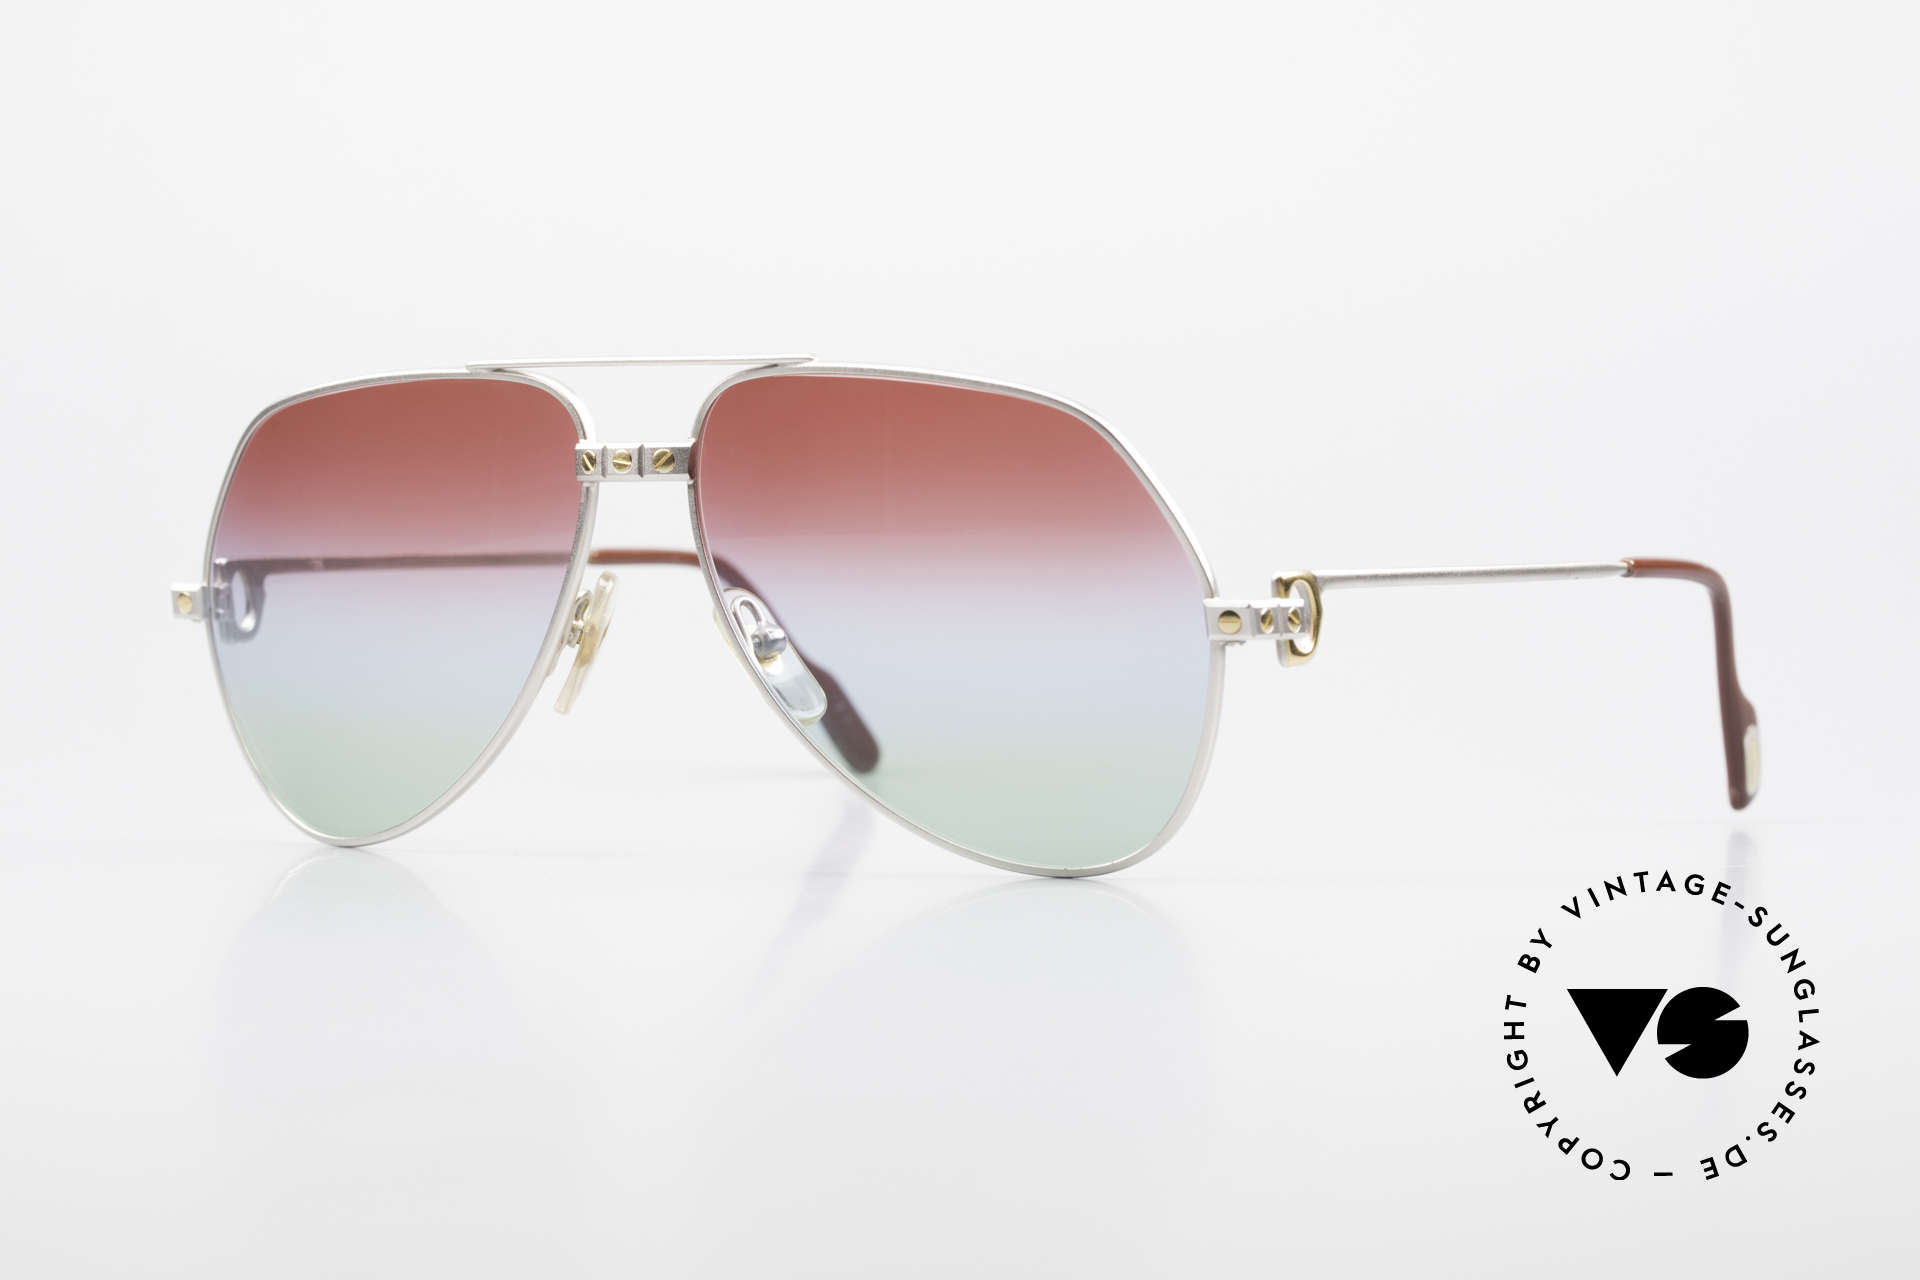 Cartier Vendome Santos - M Palladium Finish Polar Lights, vintage Cartier aviator sunglasses, Palladium Edition!, Made for Men